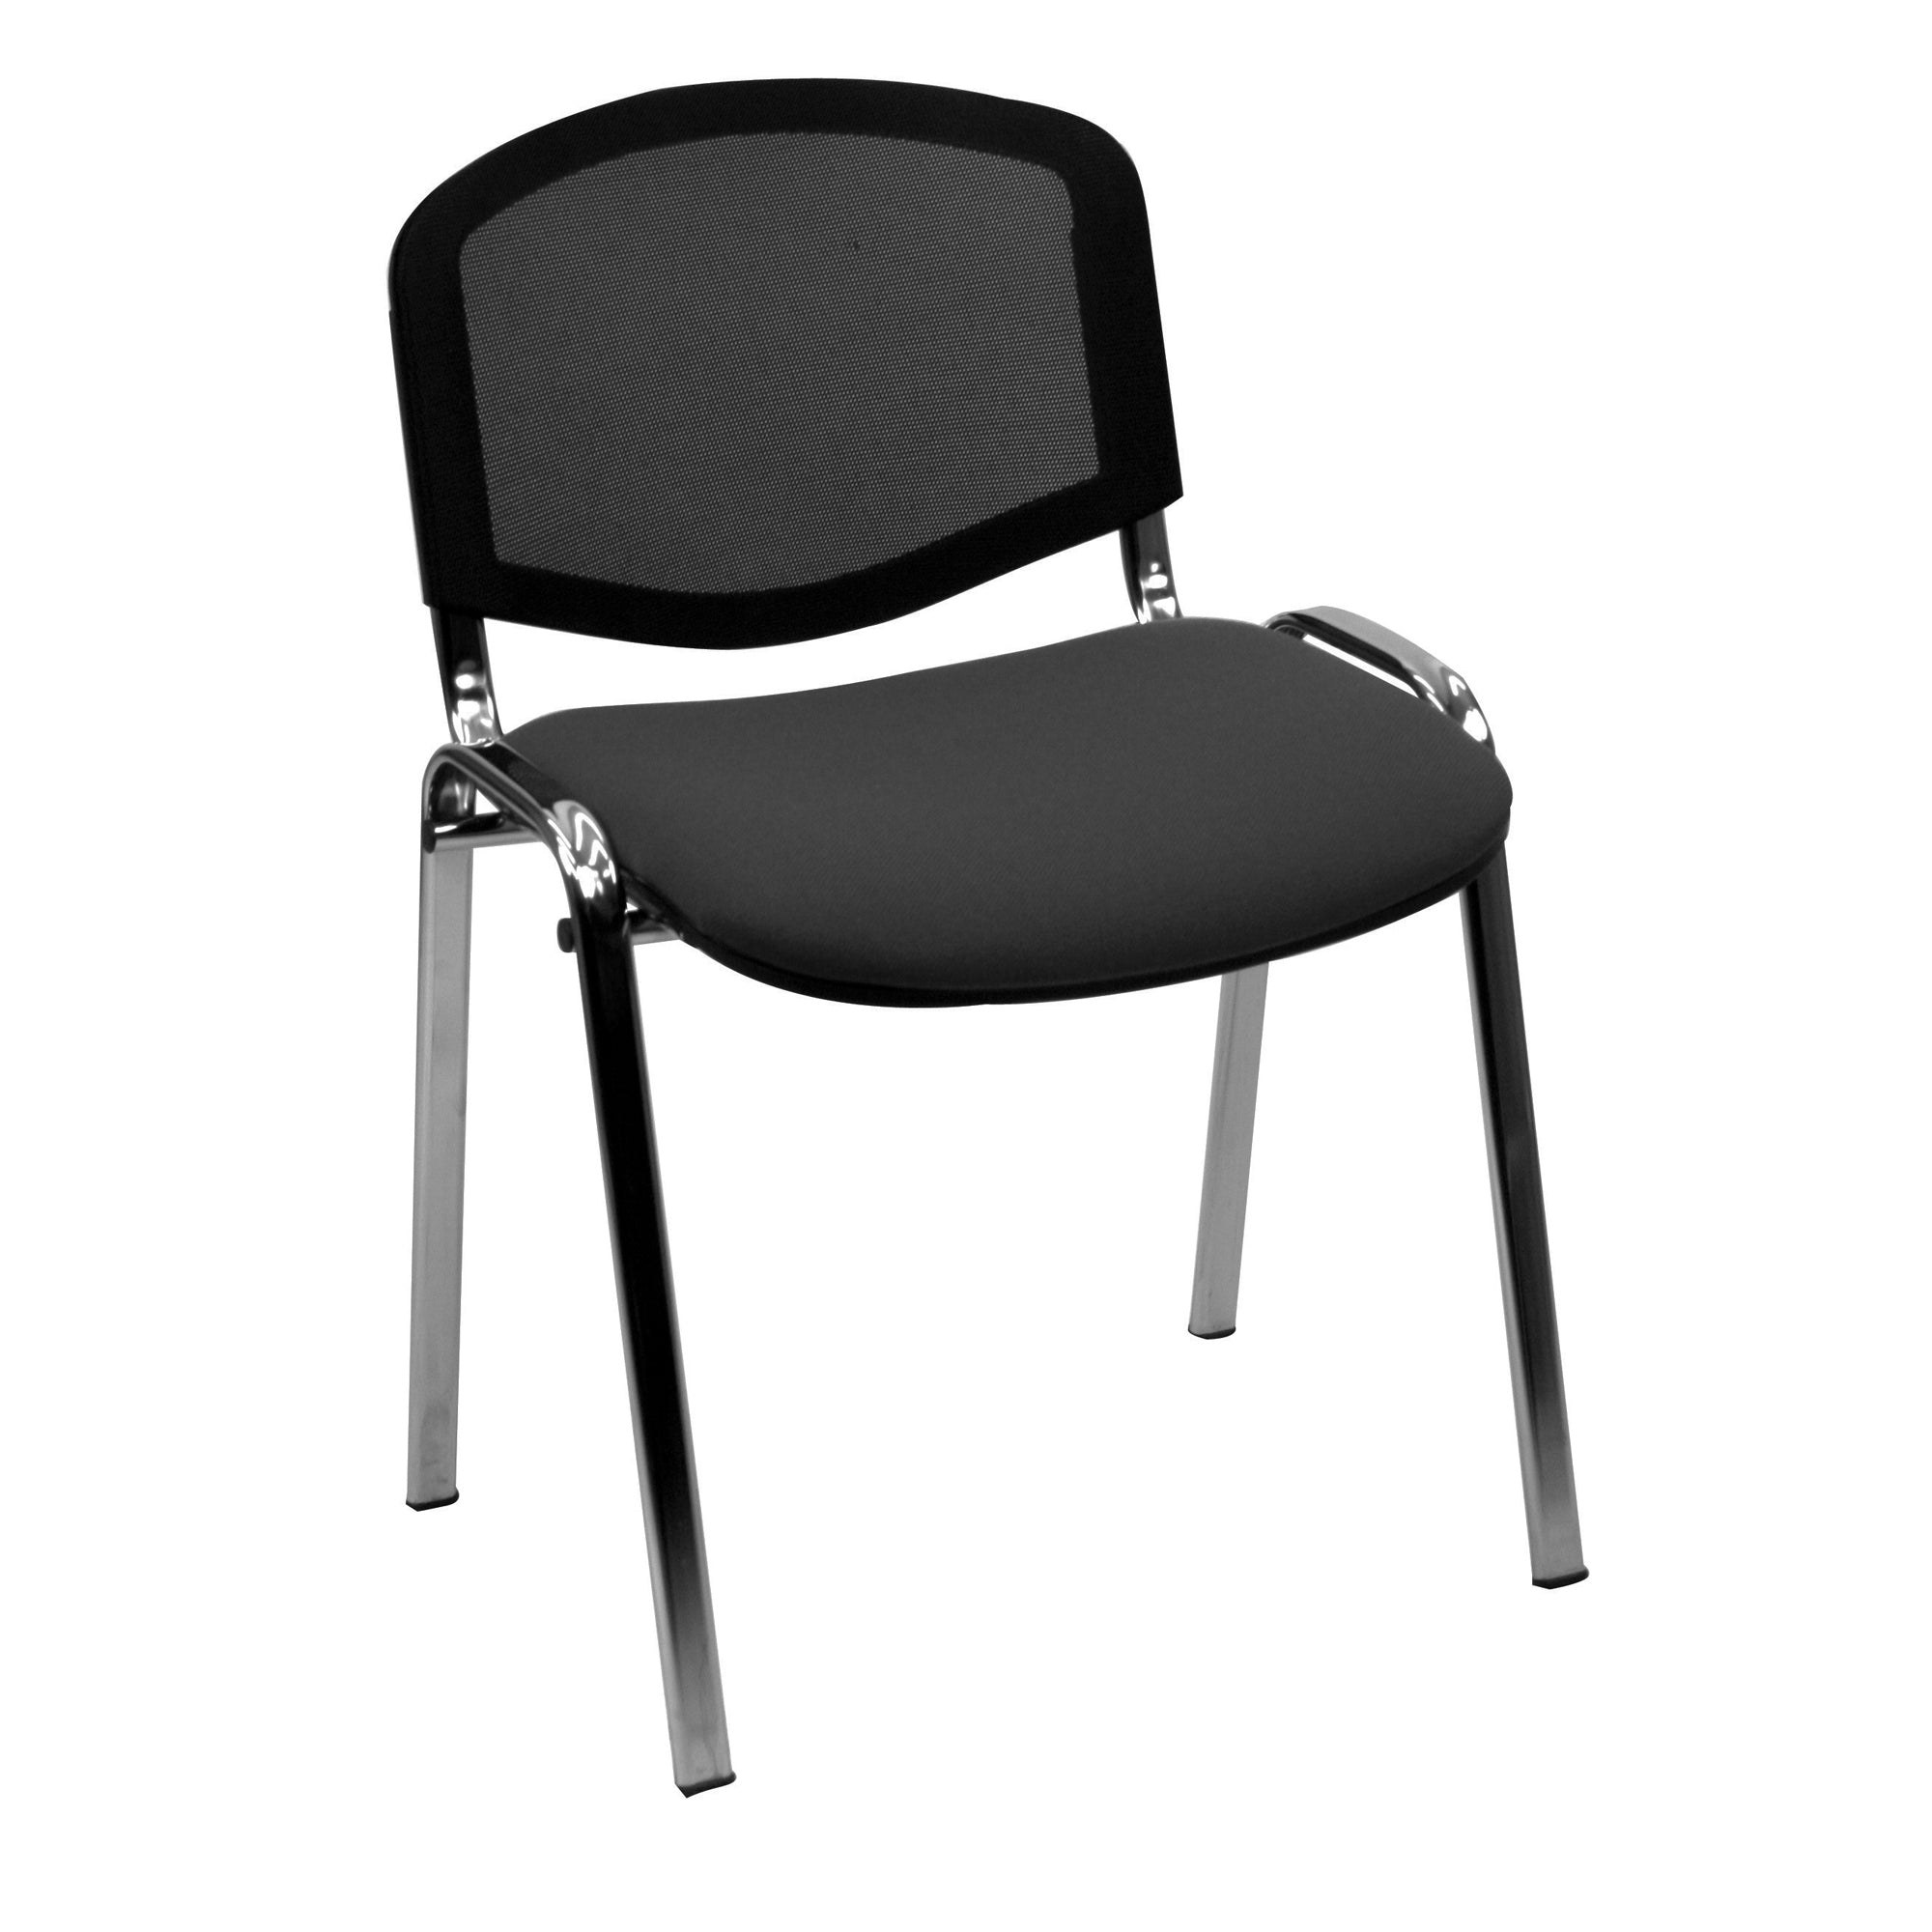 unisit-sedia-attesa-dado-d5cn-nero-senza-braccioli